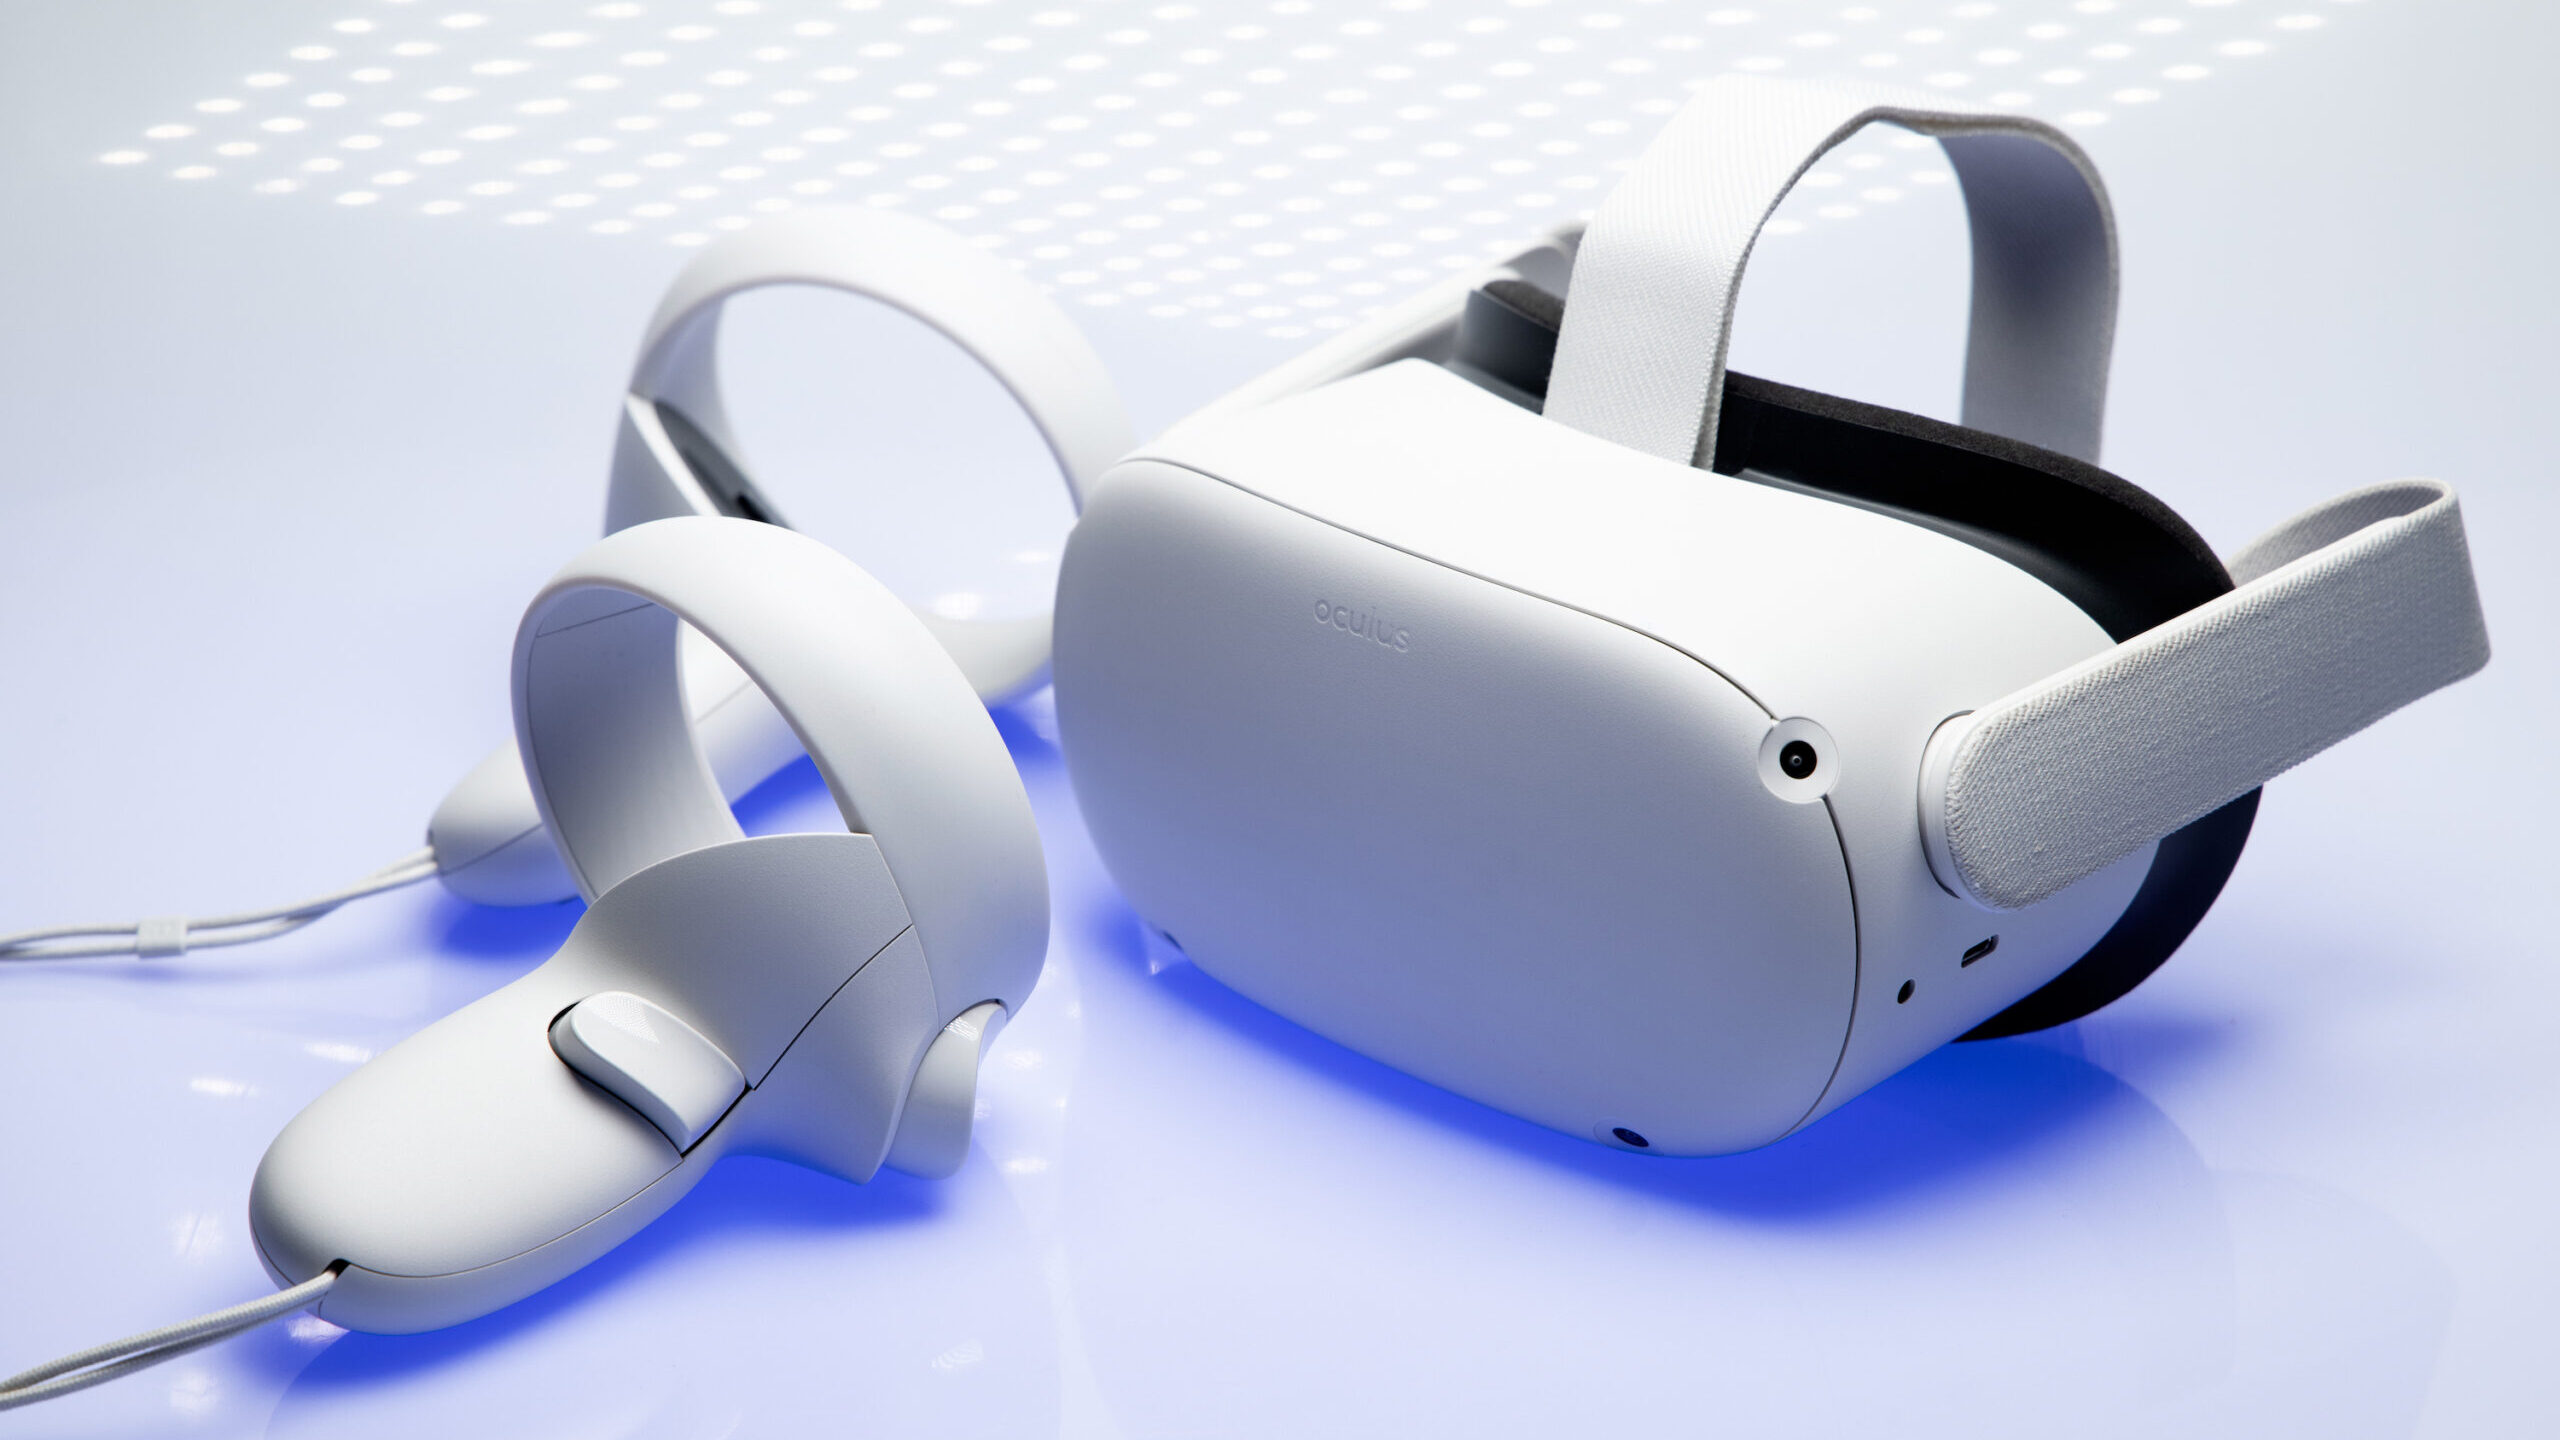 White new generation Oculus VR headset isolated on white background.